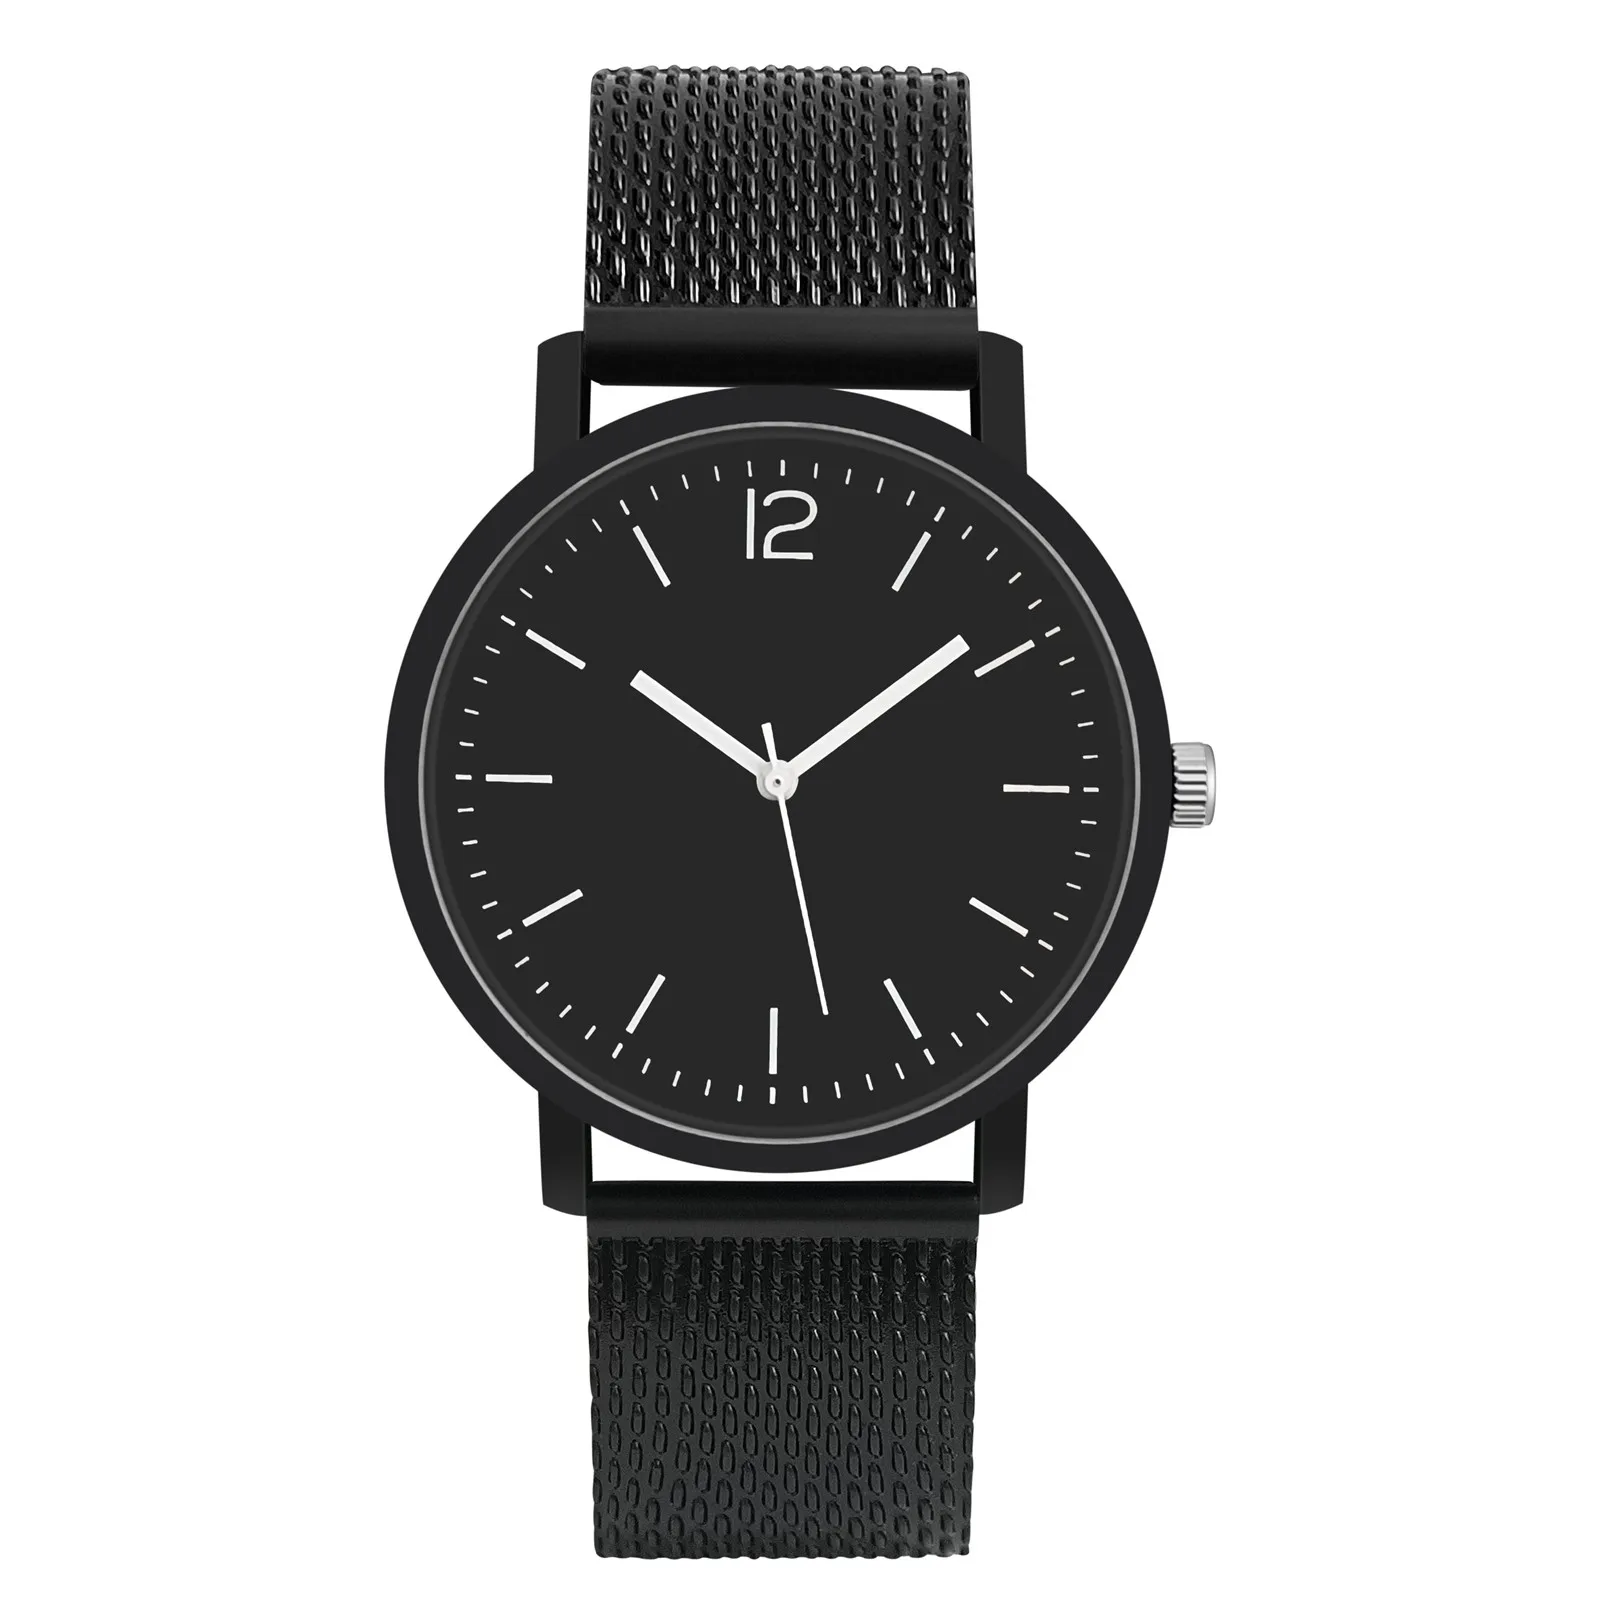 

Men'S Watch Fashion Cool Black Disc Analog Quartz Watch Silicone Mesh Band Analog Watch Casual Business Lover Gift Reloj